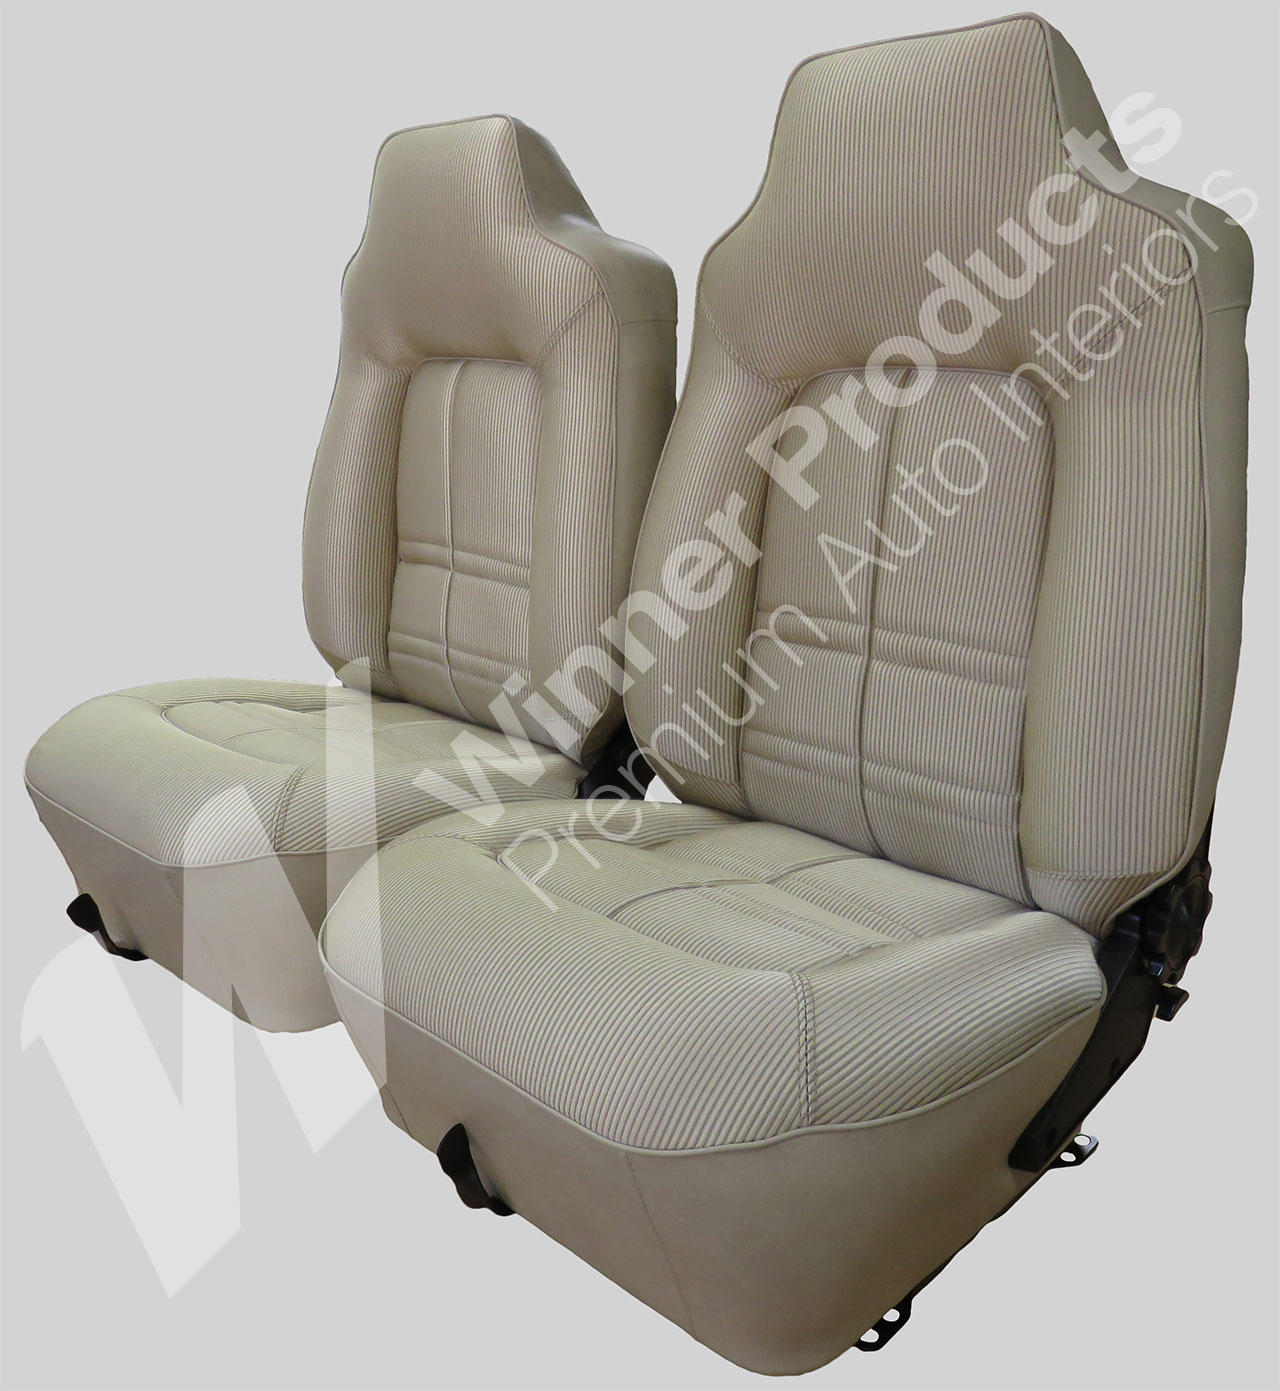 Holden Monaro HJ Monaro LS Coupe Seat Frame Restoration Fitting (Image 1 of 1)